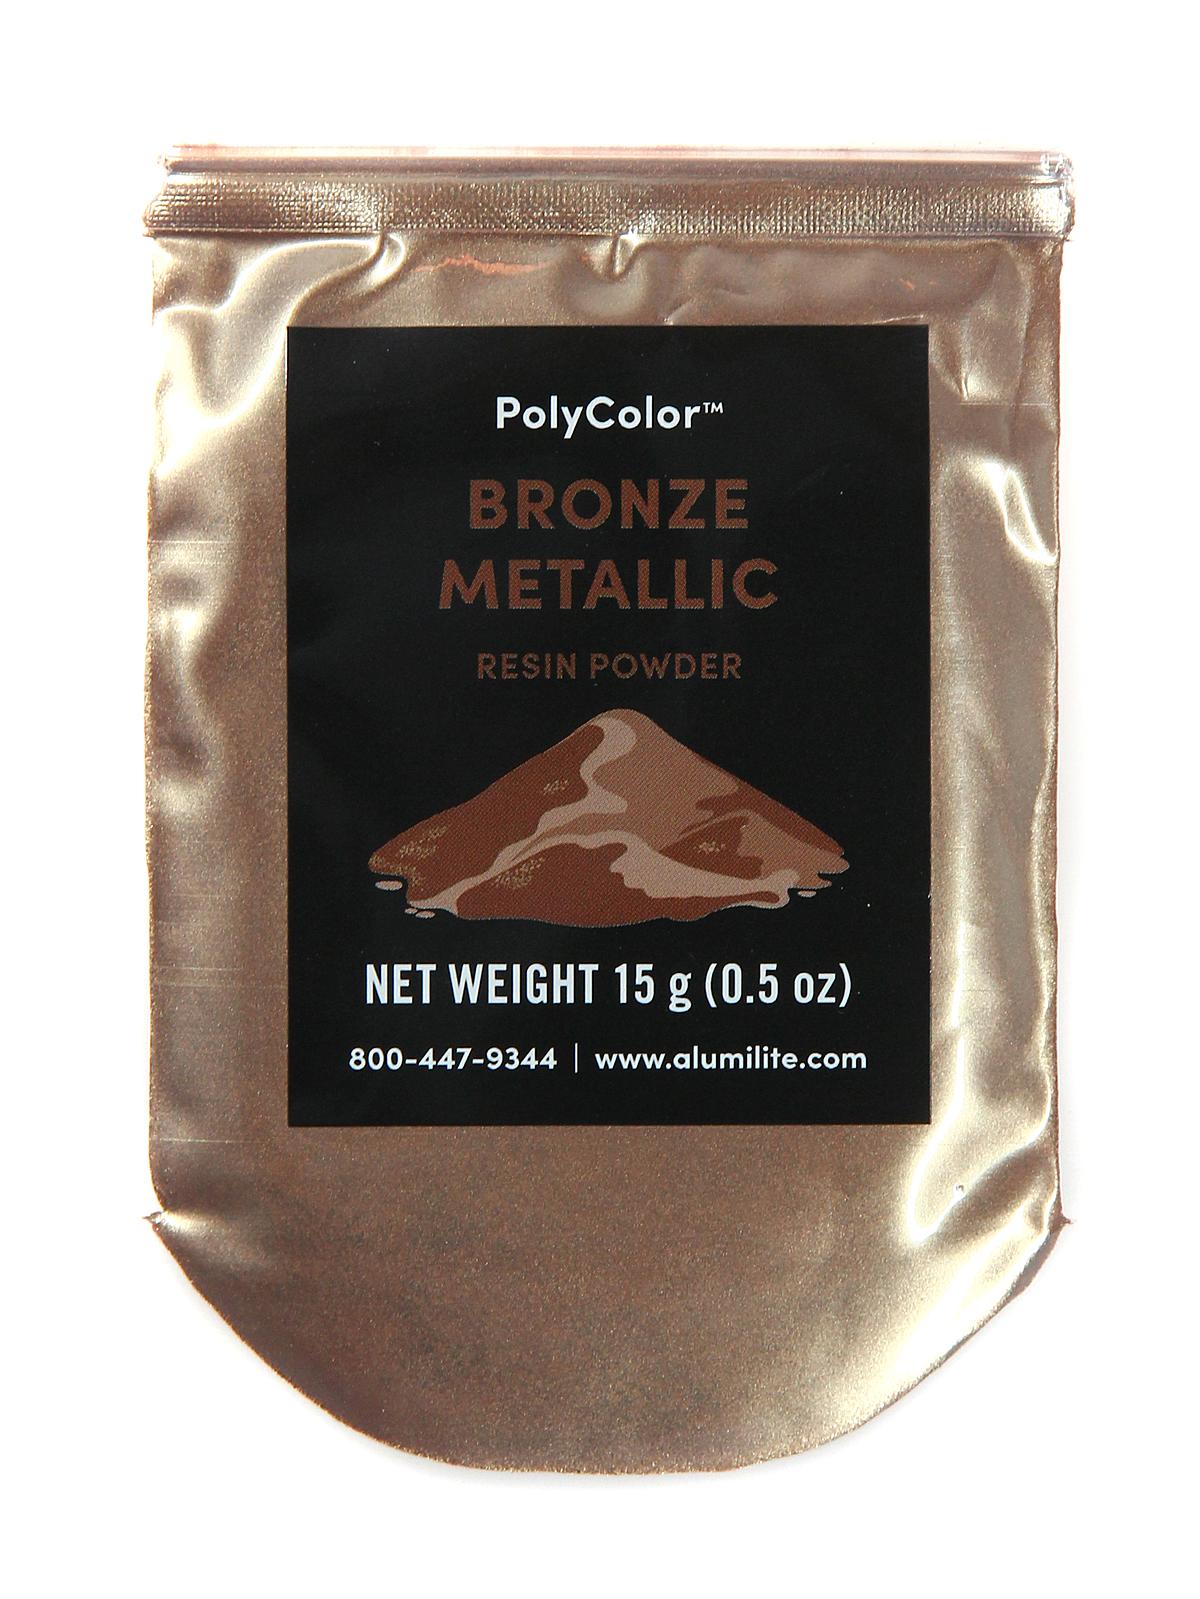 PolyColor Resin Powder Bronze Metallic Bag 15 G (0.5 Oz.)